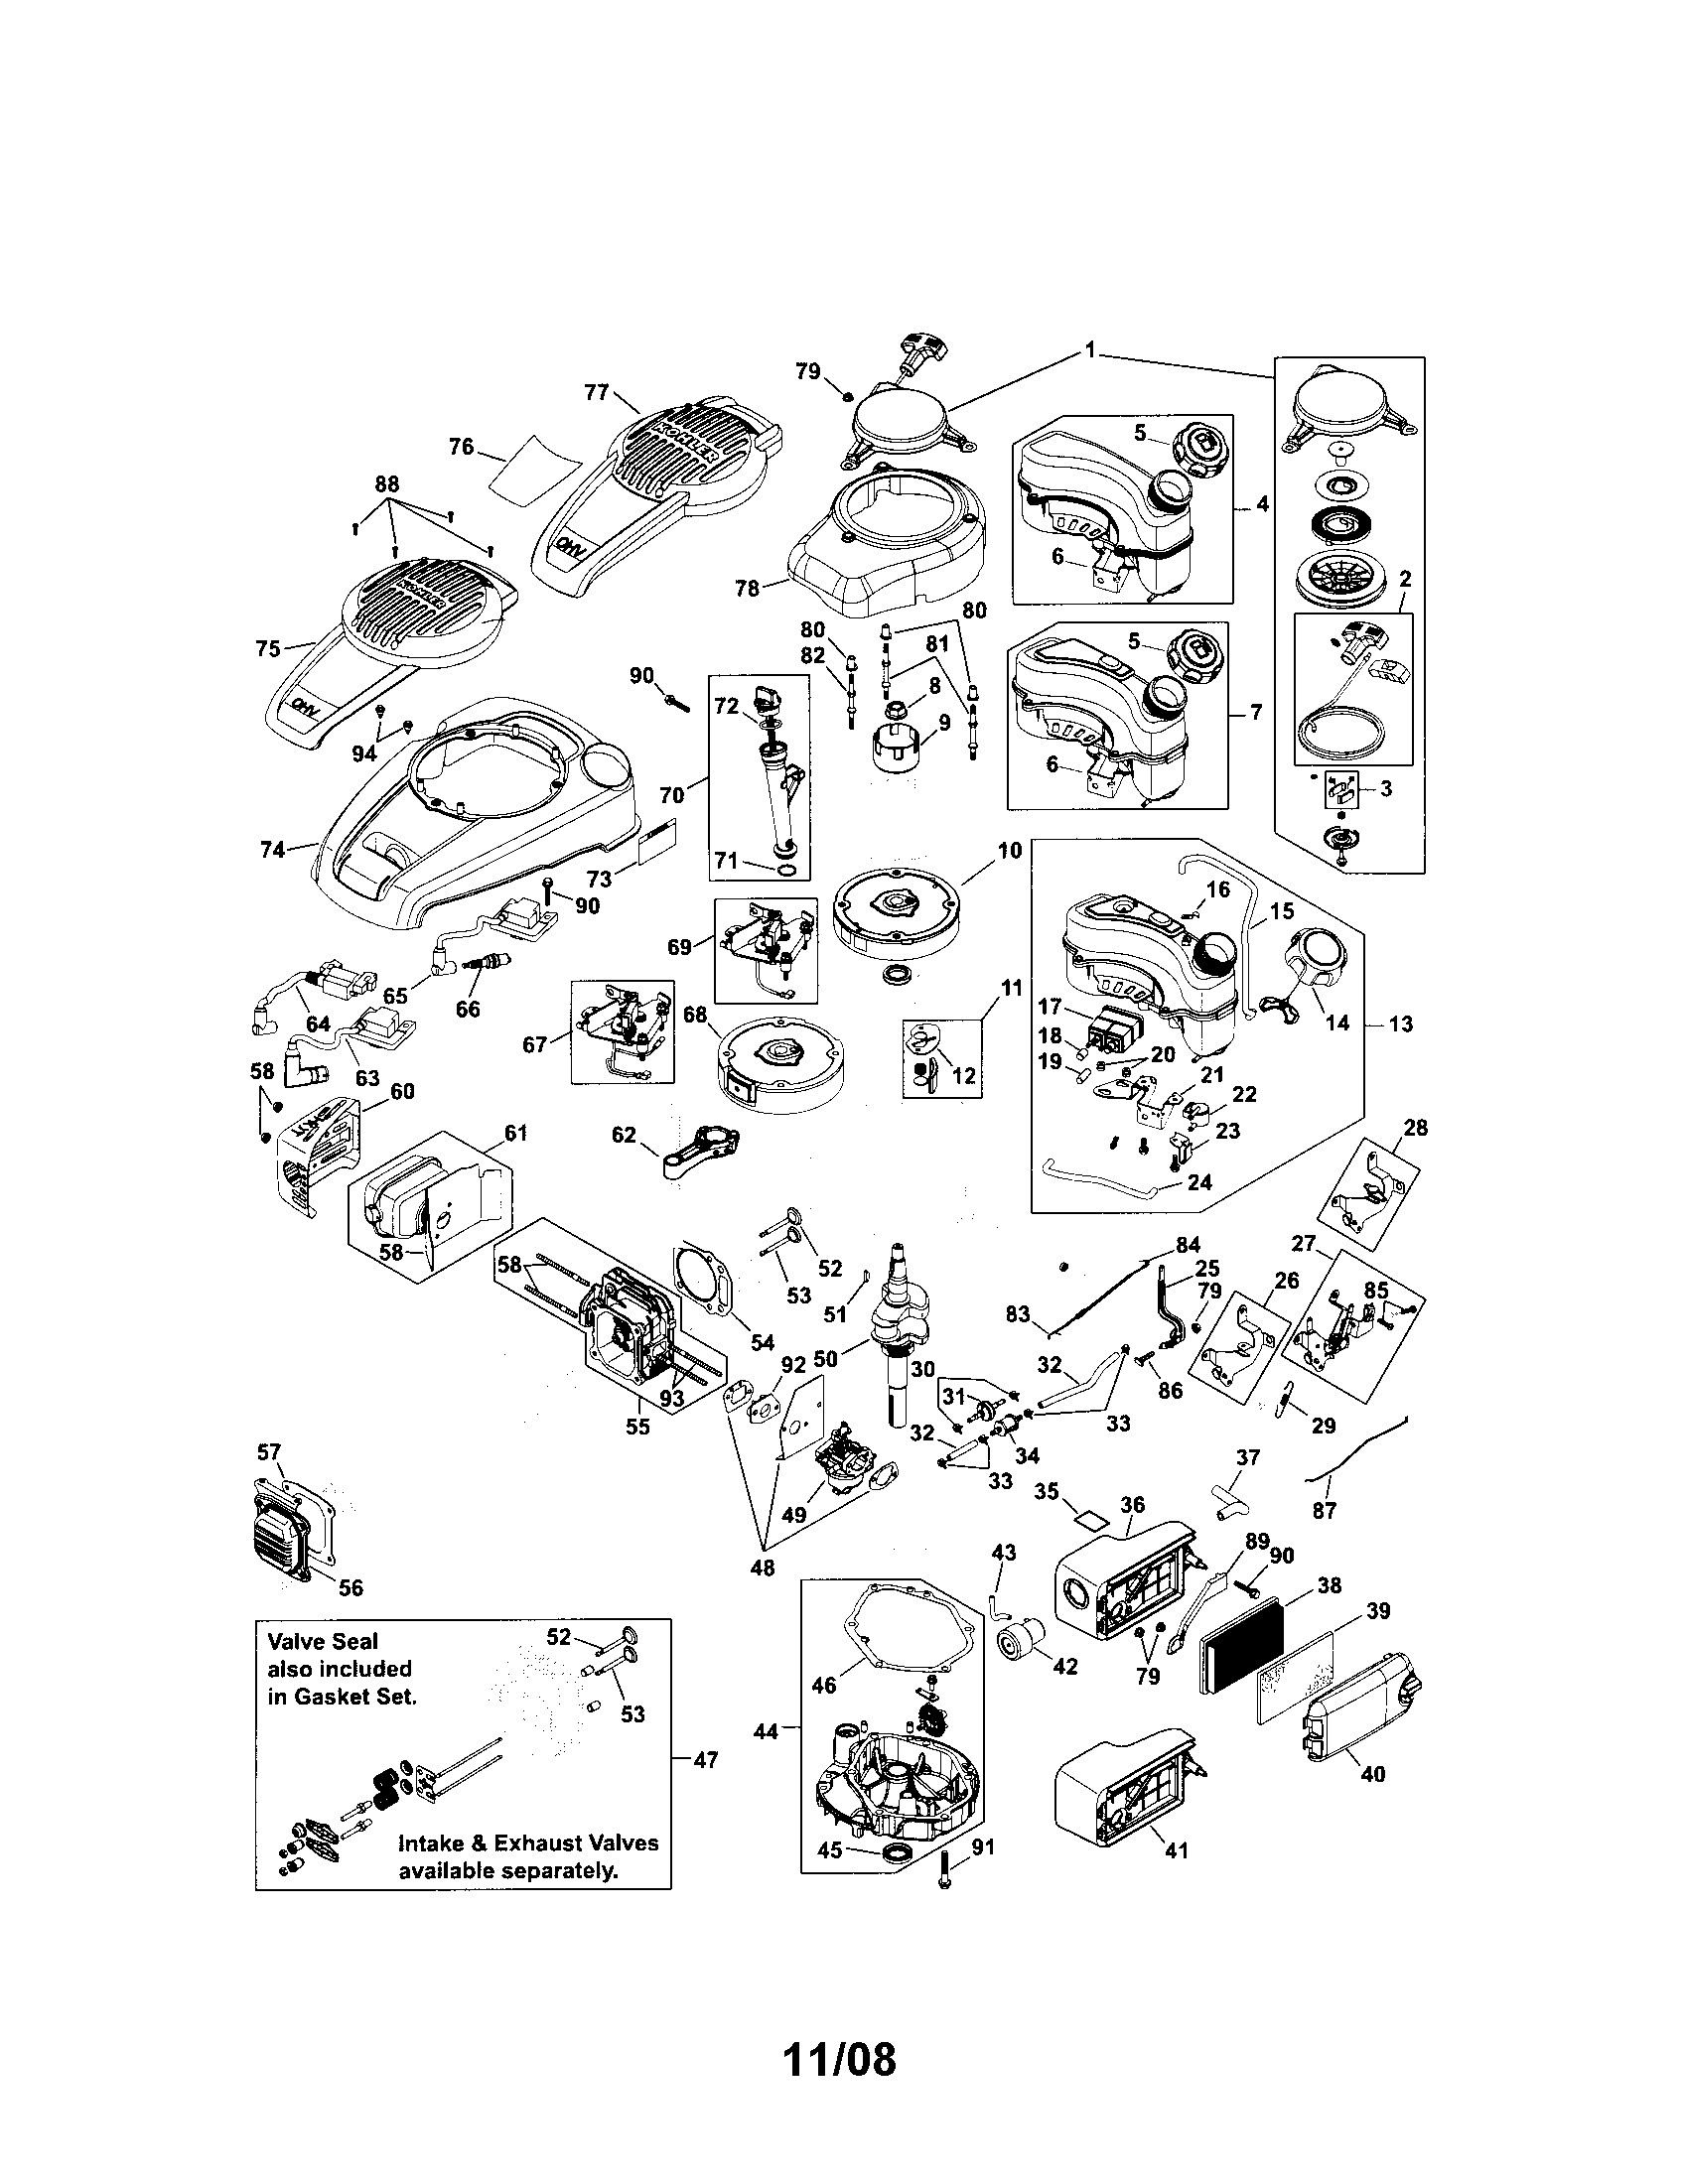 Kohler K301 Engine Diagram | My Wiring DIagram